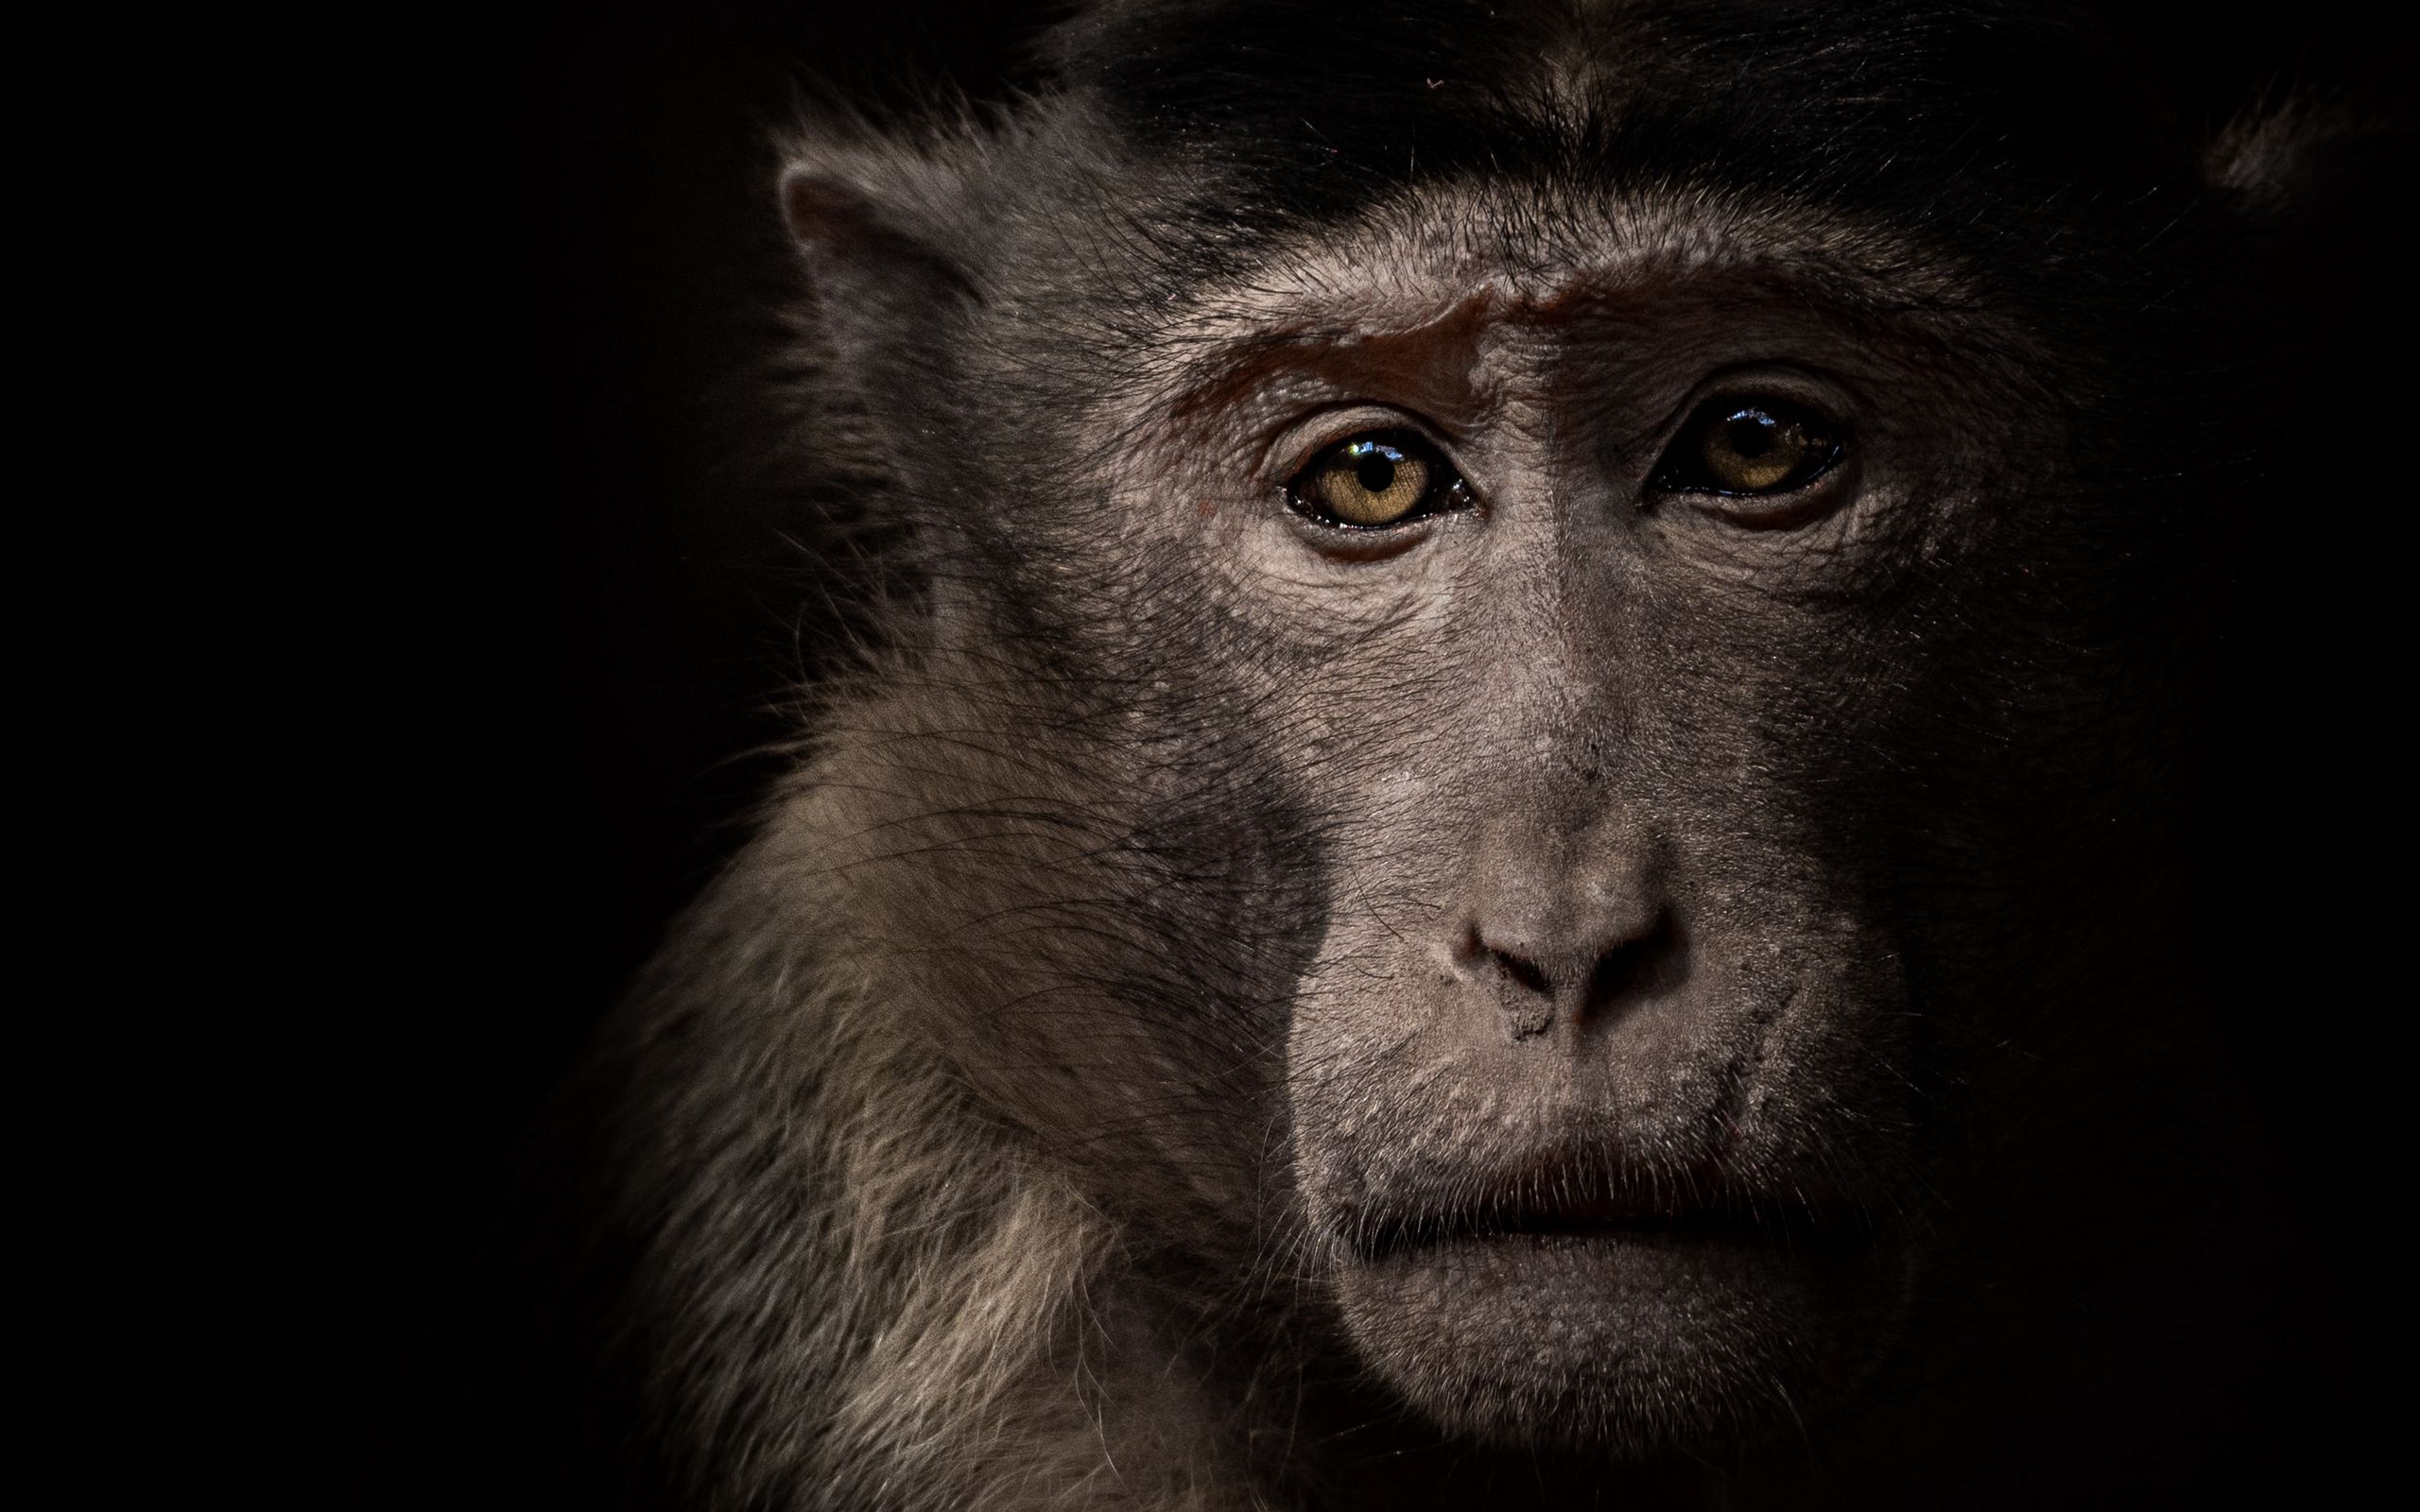 Download wallpaper 2560x1600 monkey, face, animal, black widescreen 16:10 HD background